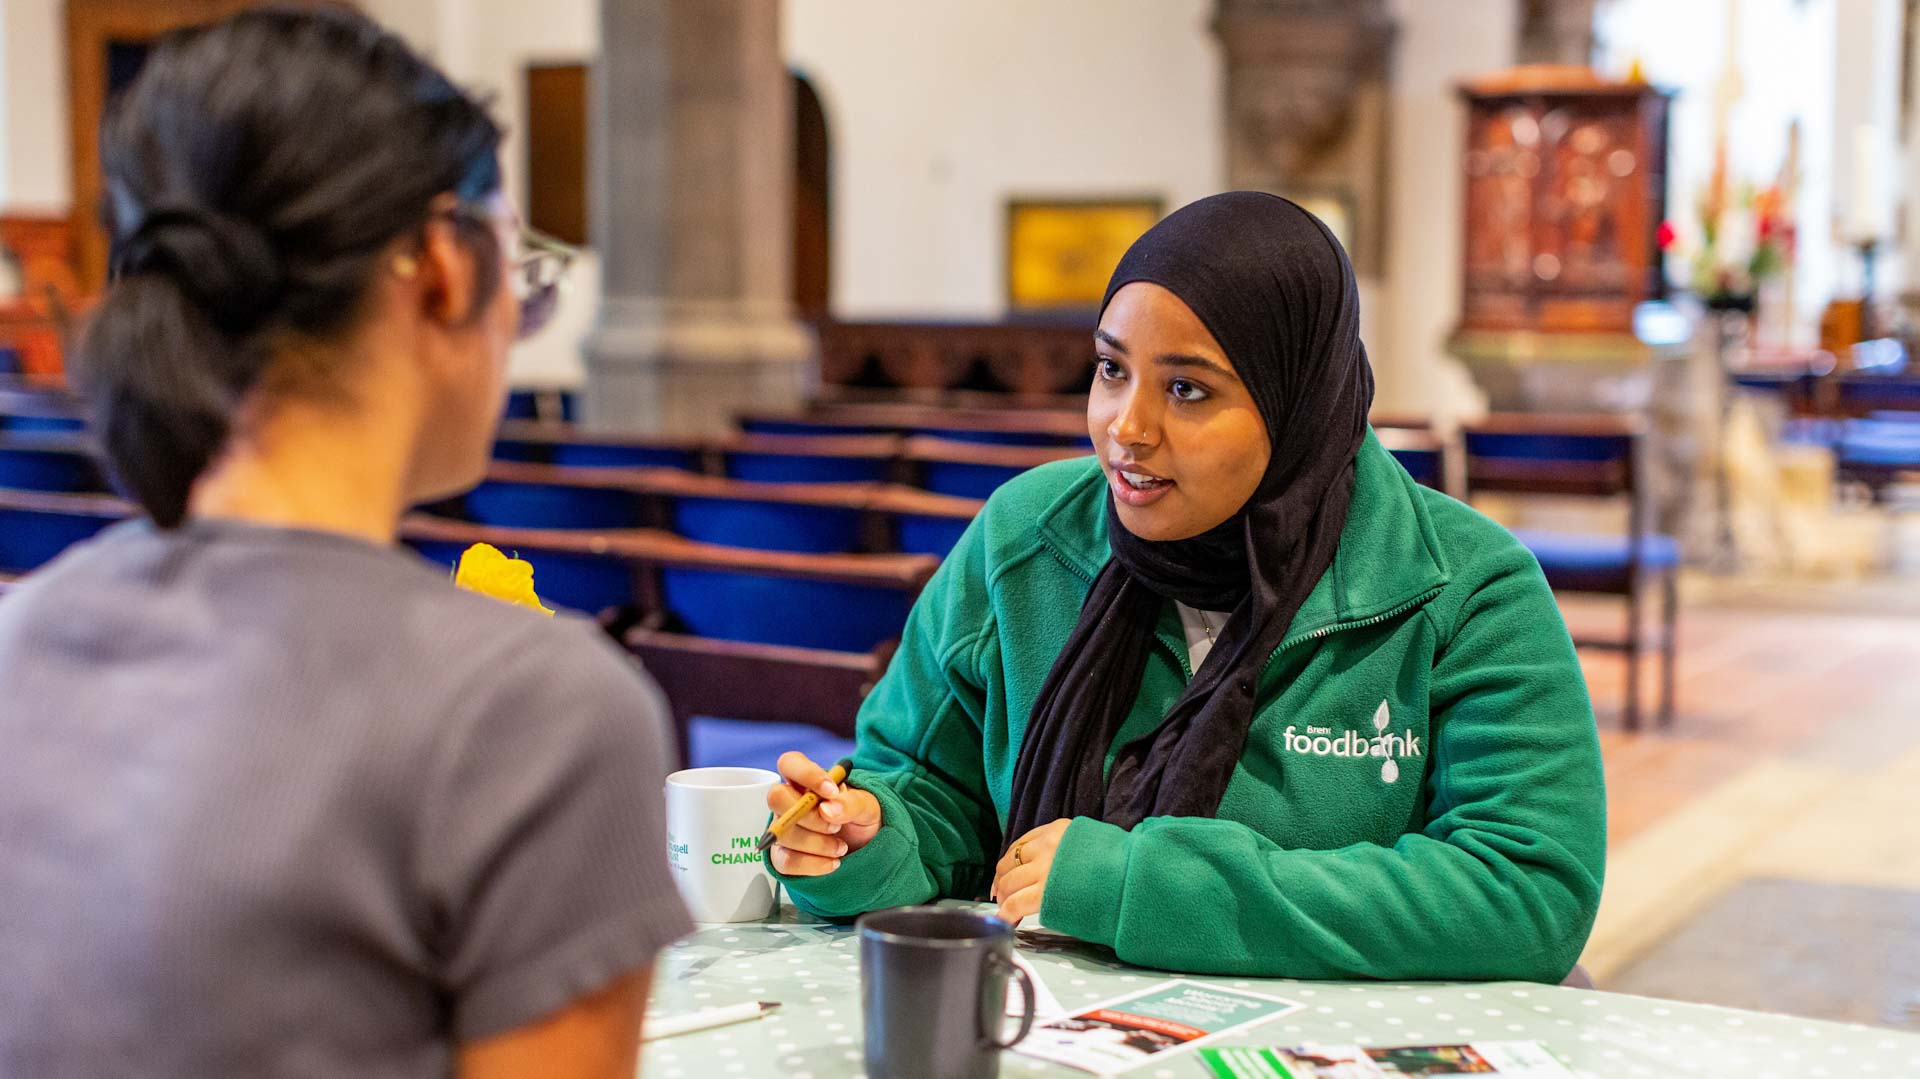 Foodbank volunteer giving advice to client